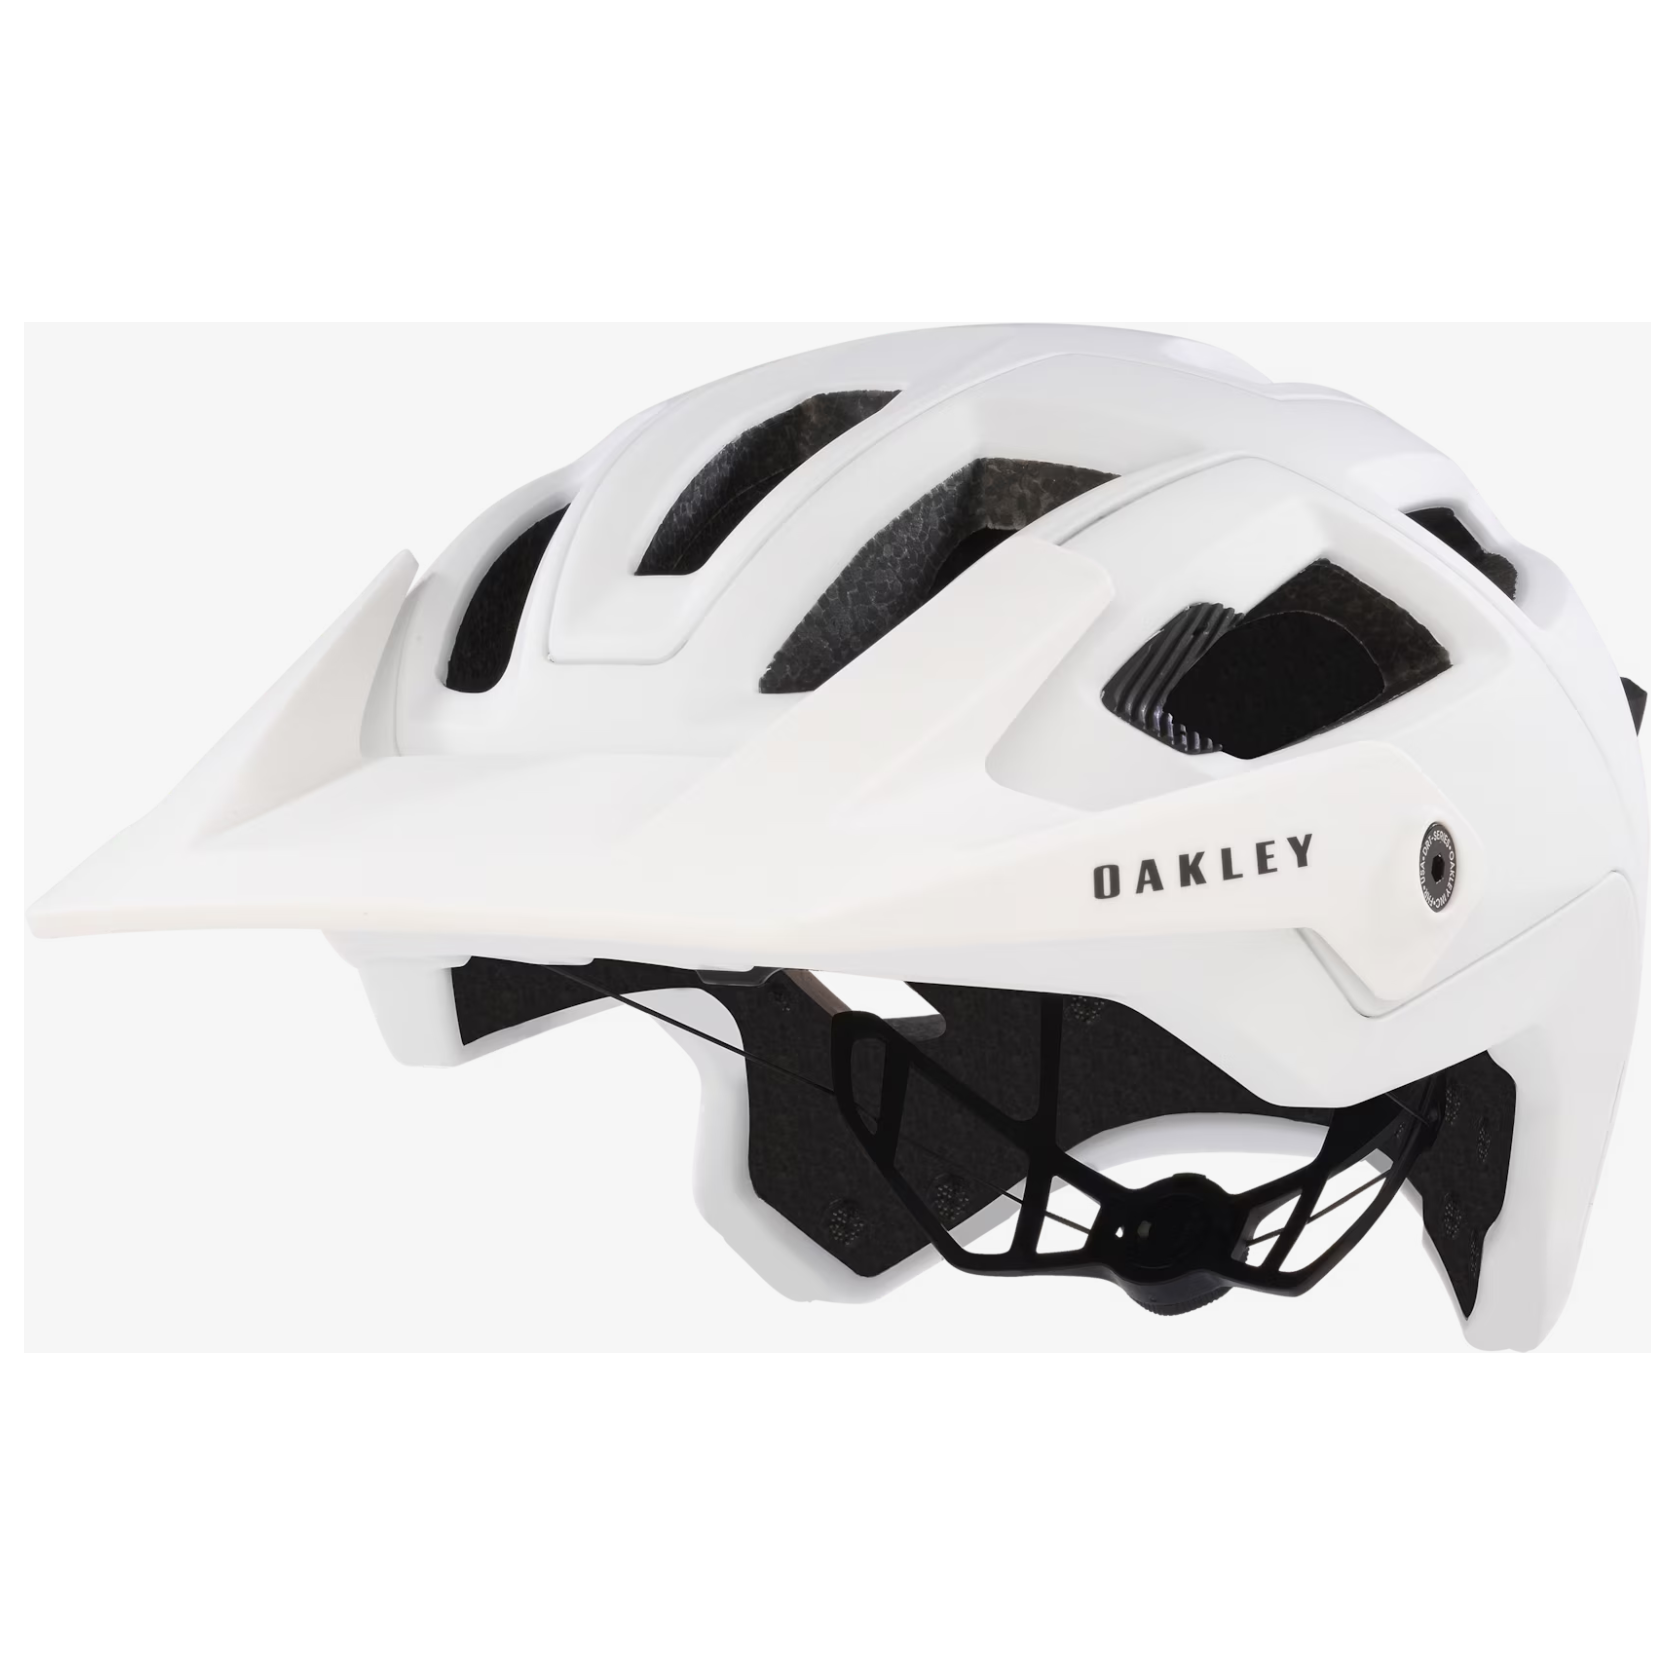 Casque vélo DRT5 Maven||Bike Helmet DRT5 Maven